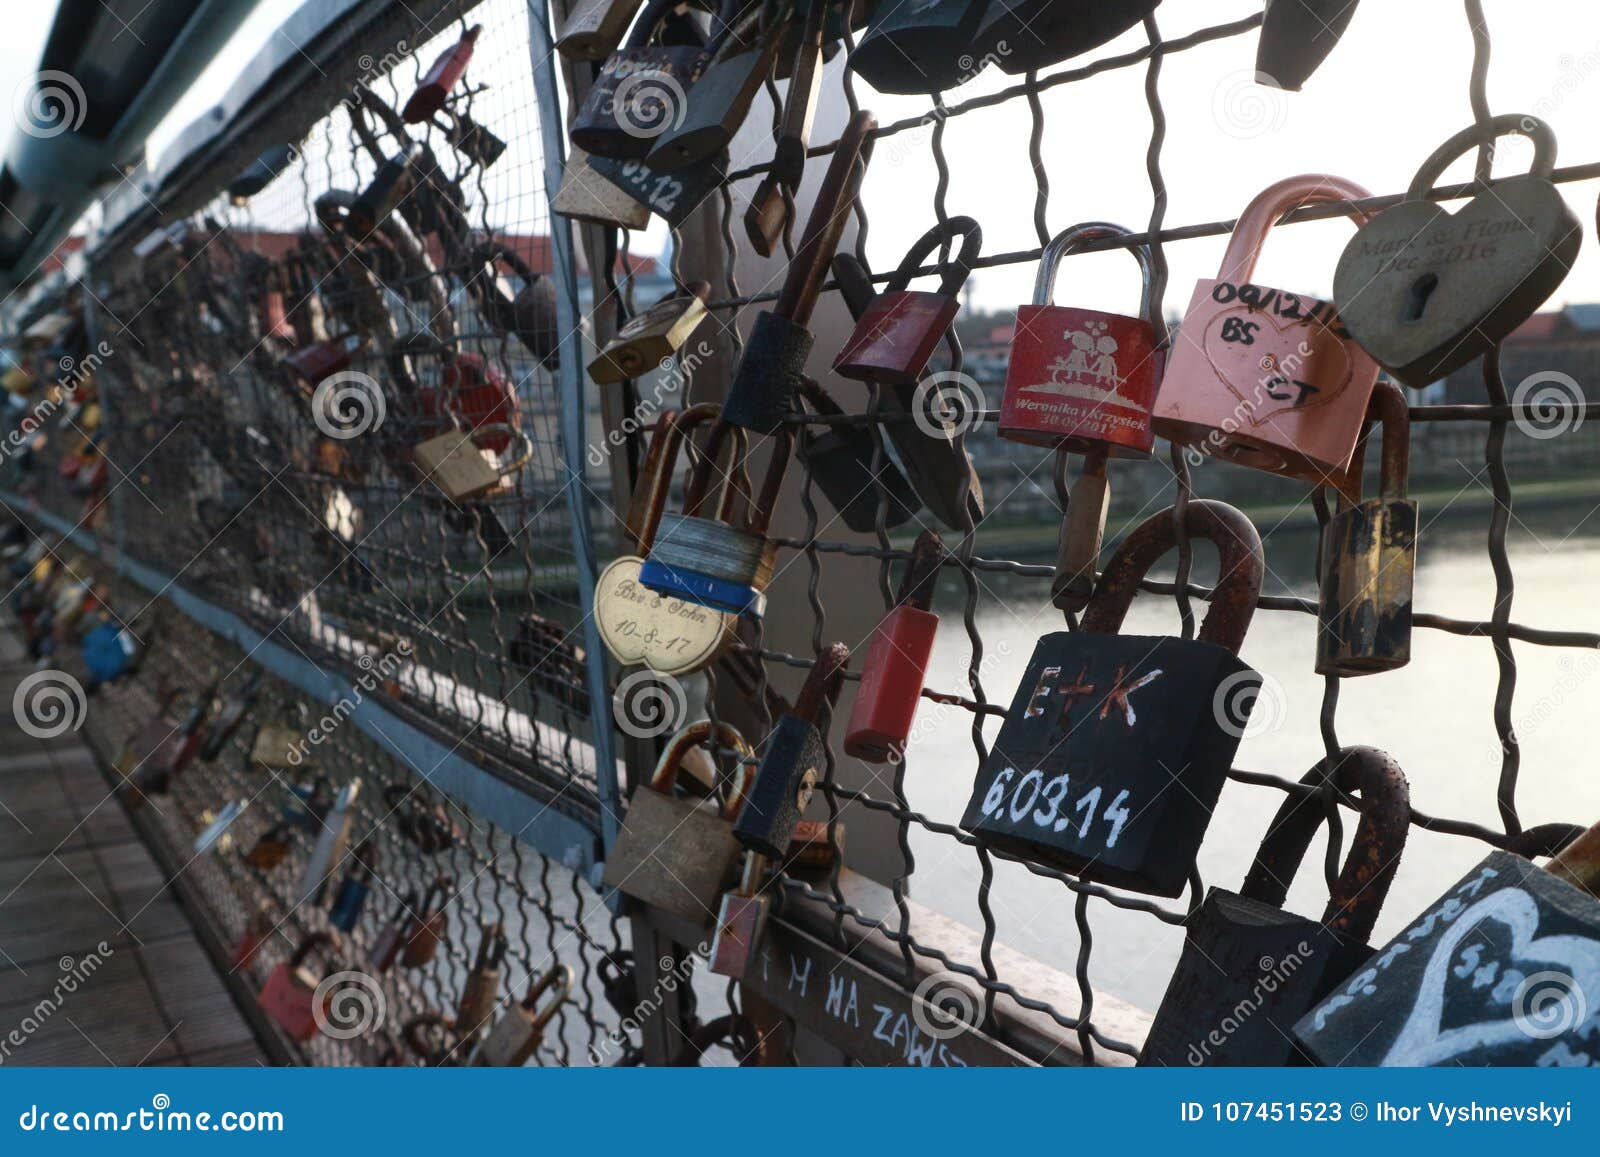 Locks Hanging on the Bridge Stock Image - Image of love, vintage: 107451523